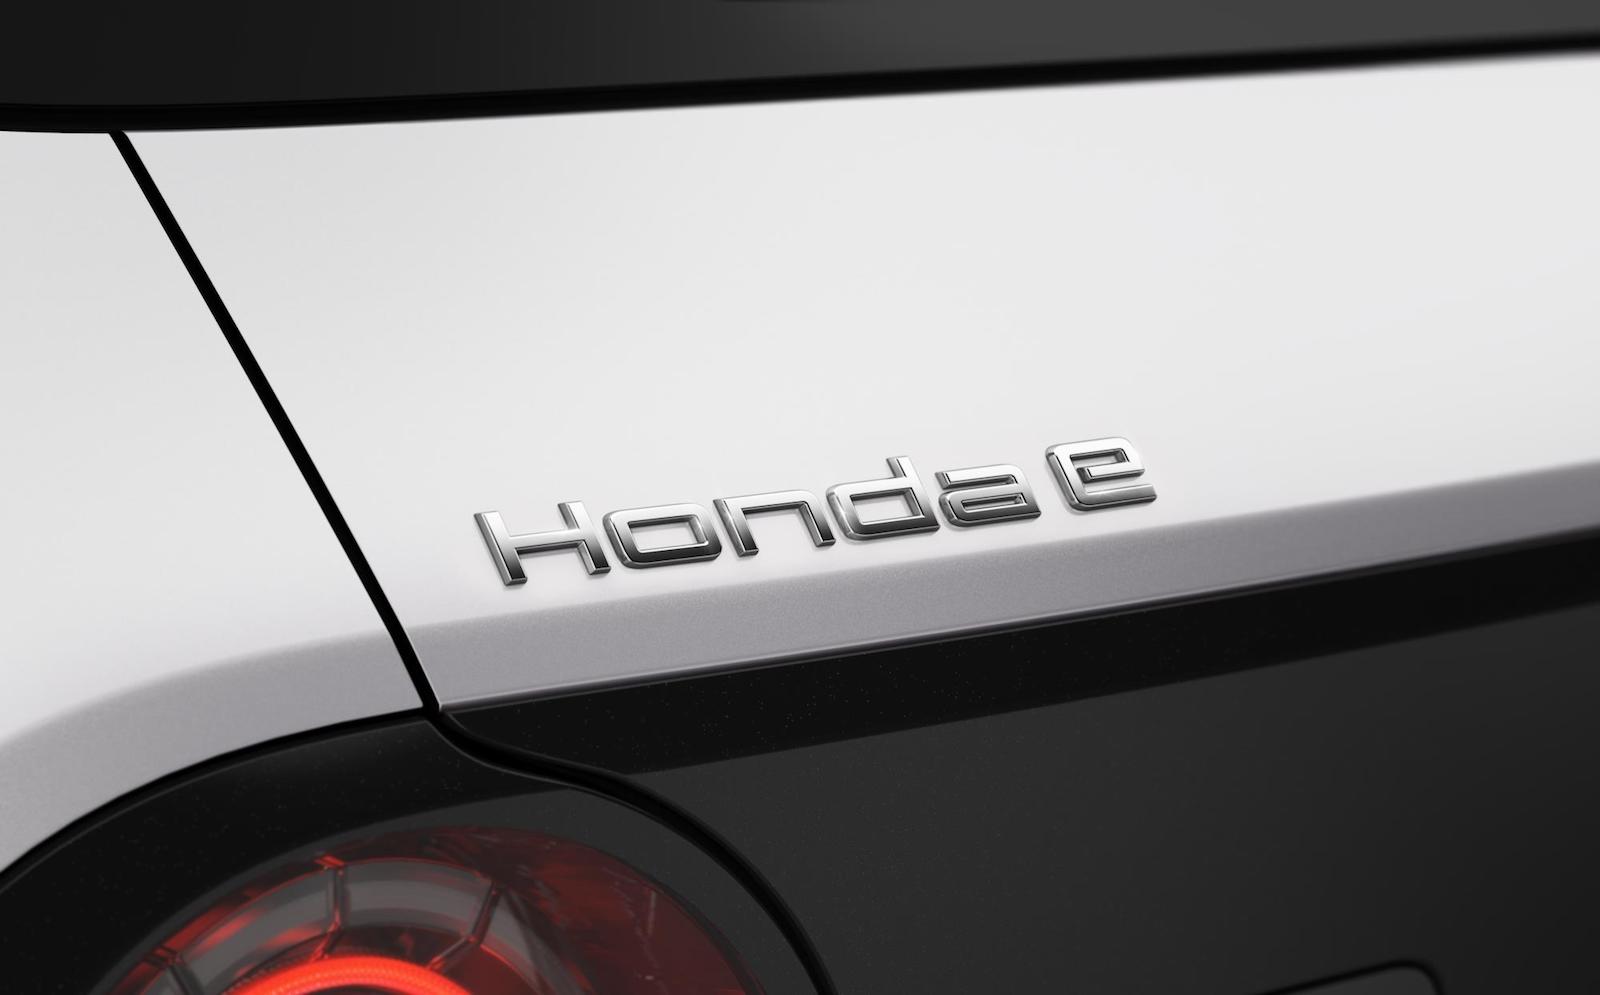 ‘Honda e’ name confirmed for RWD electric city car